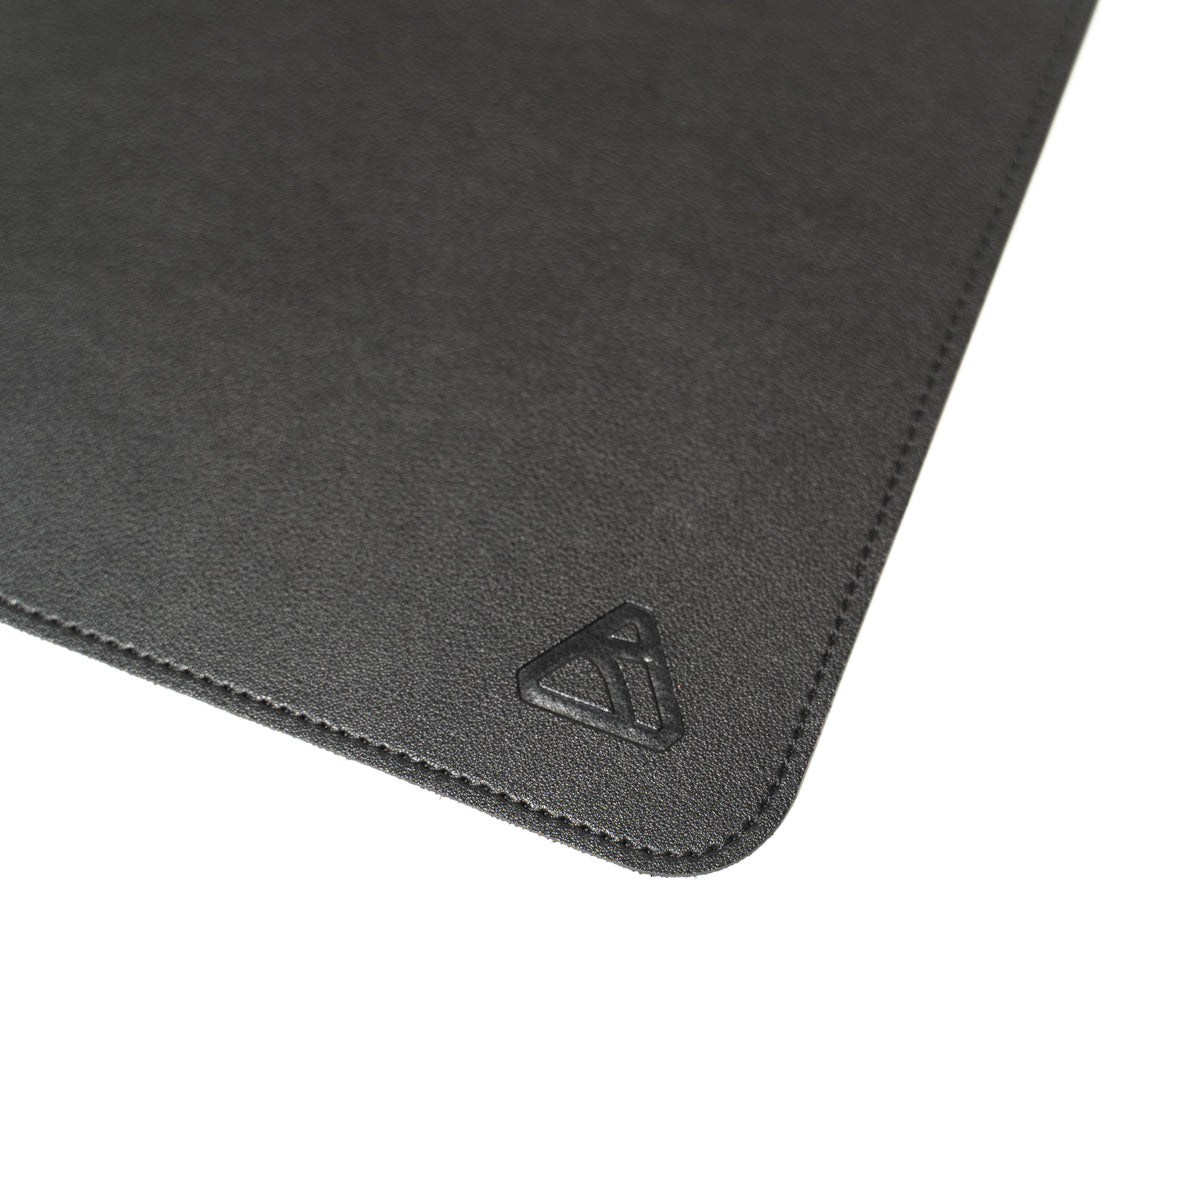 Black leather desk mat with ryskape logo